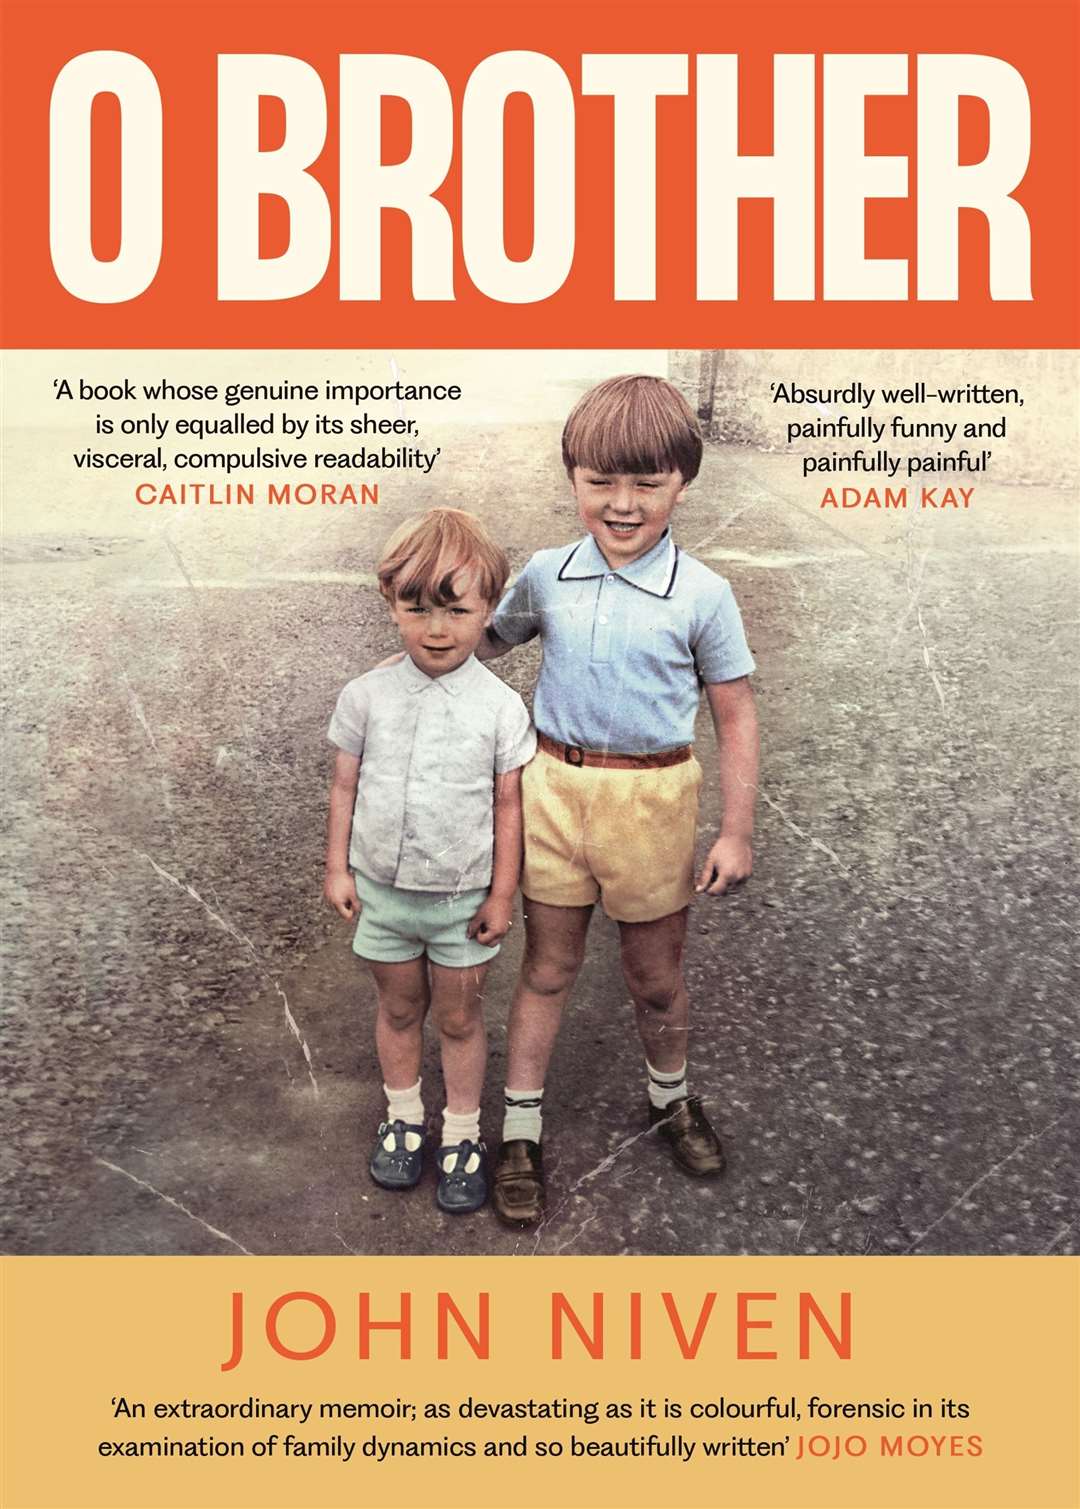 O Brother by John Niven.